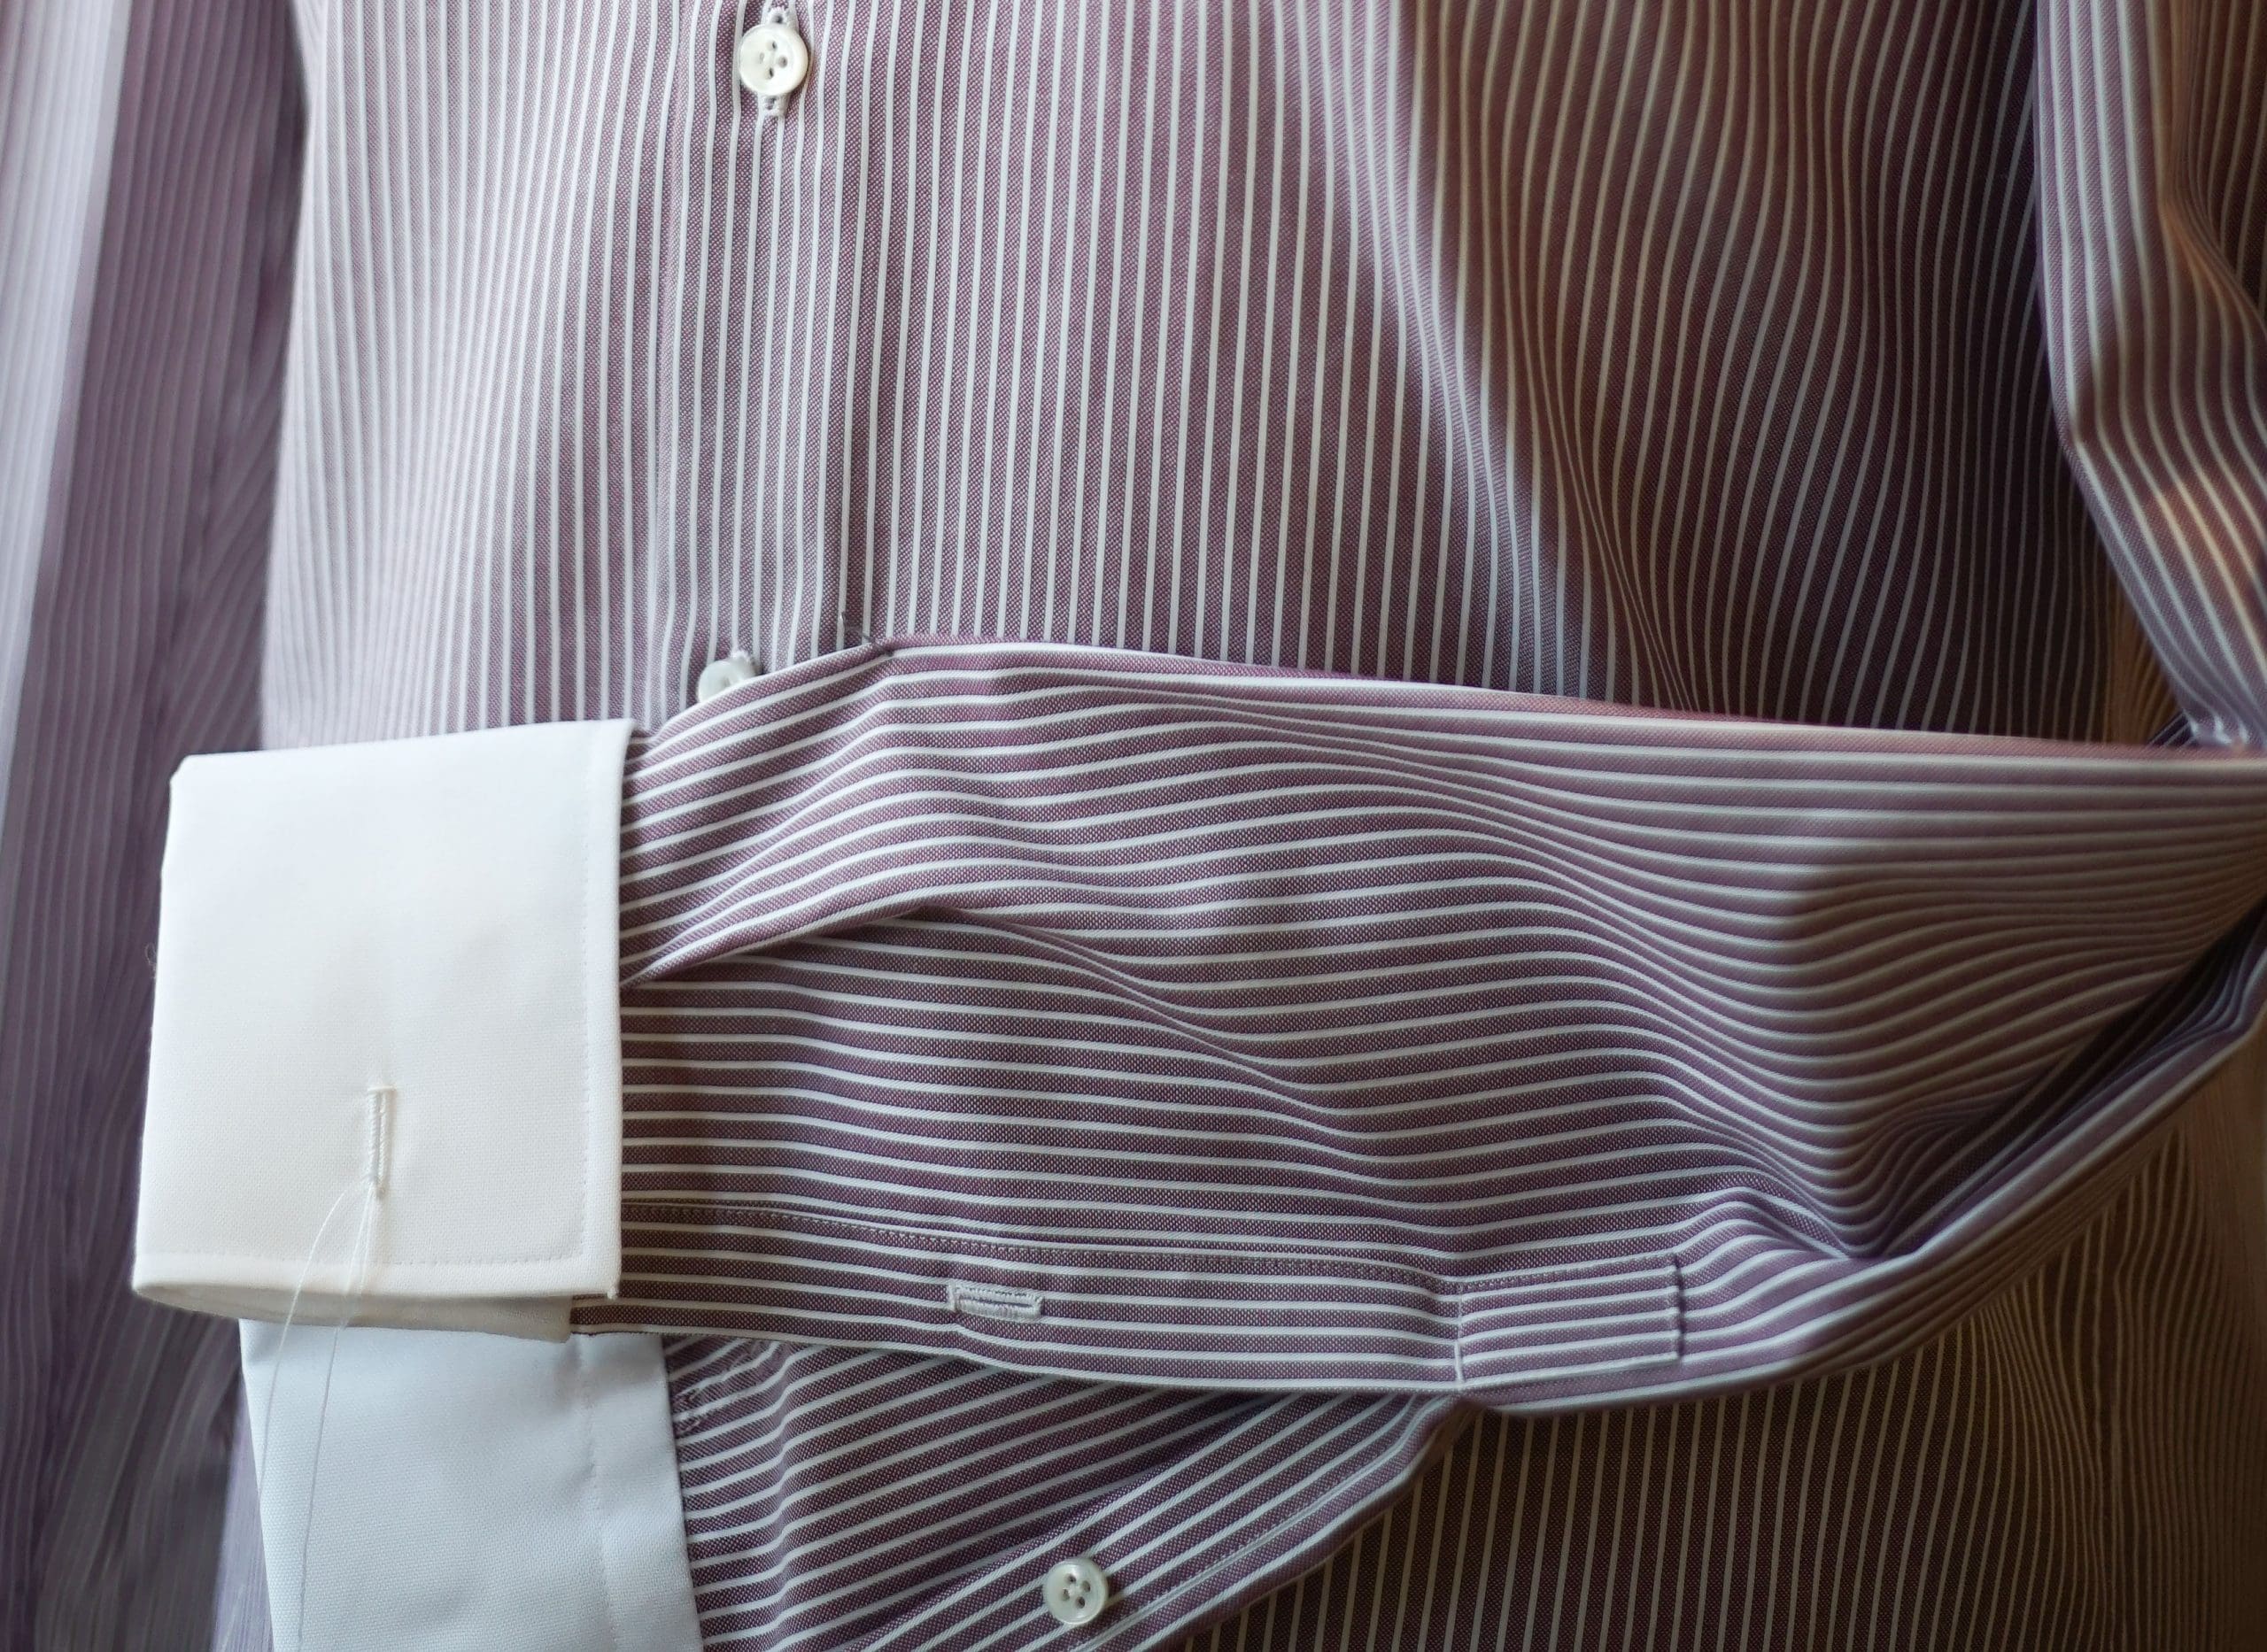 A shirt's sleeve folder over some fabric